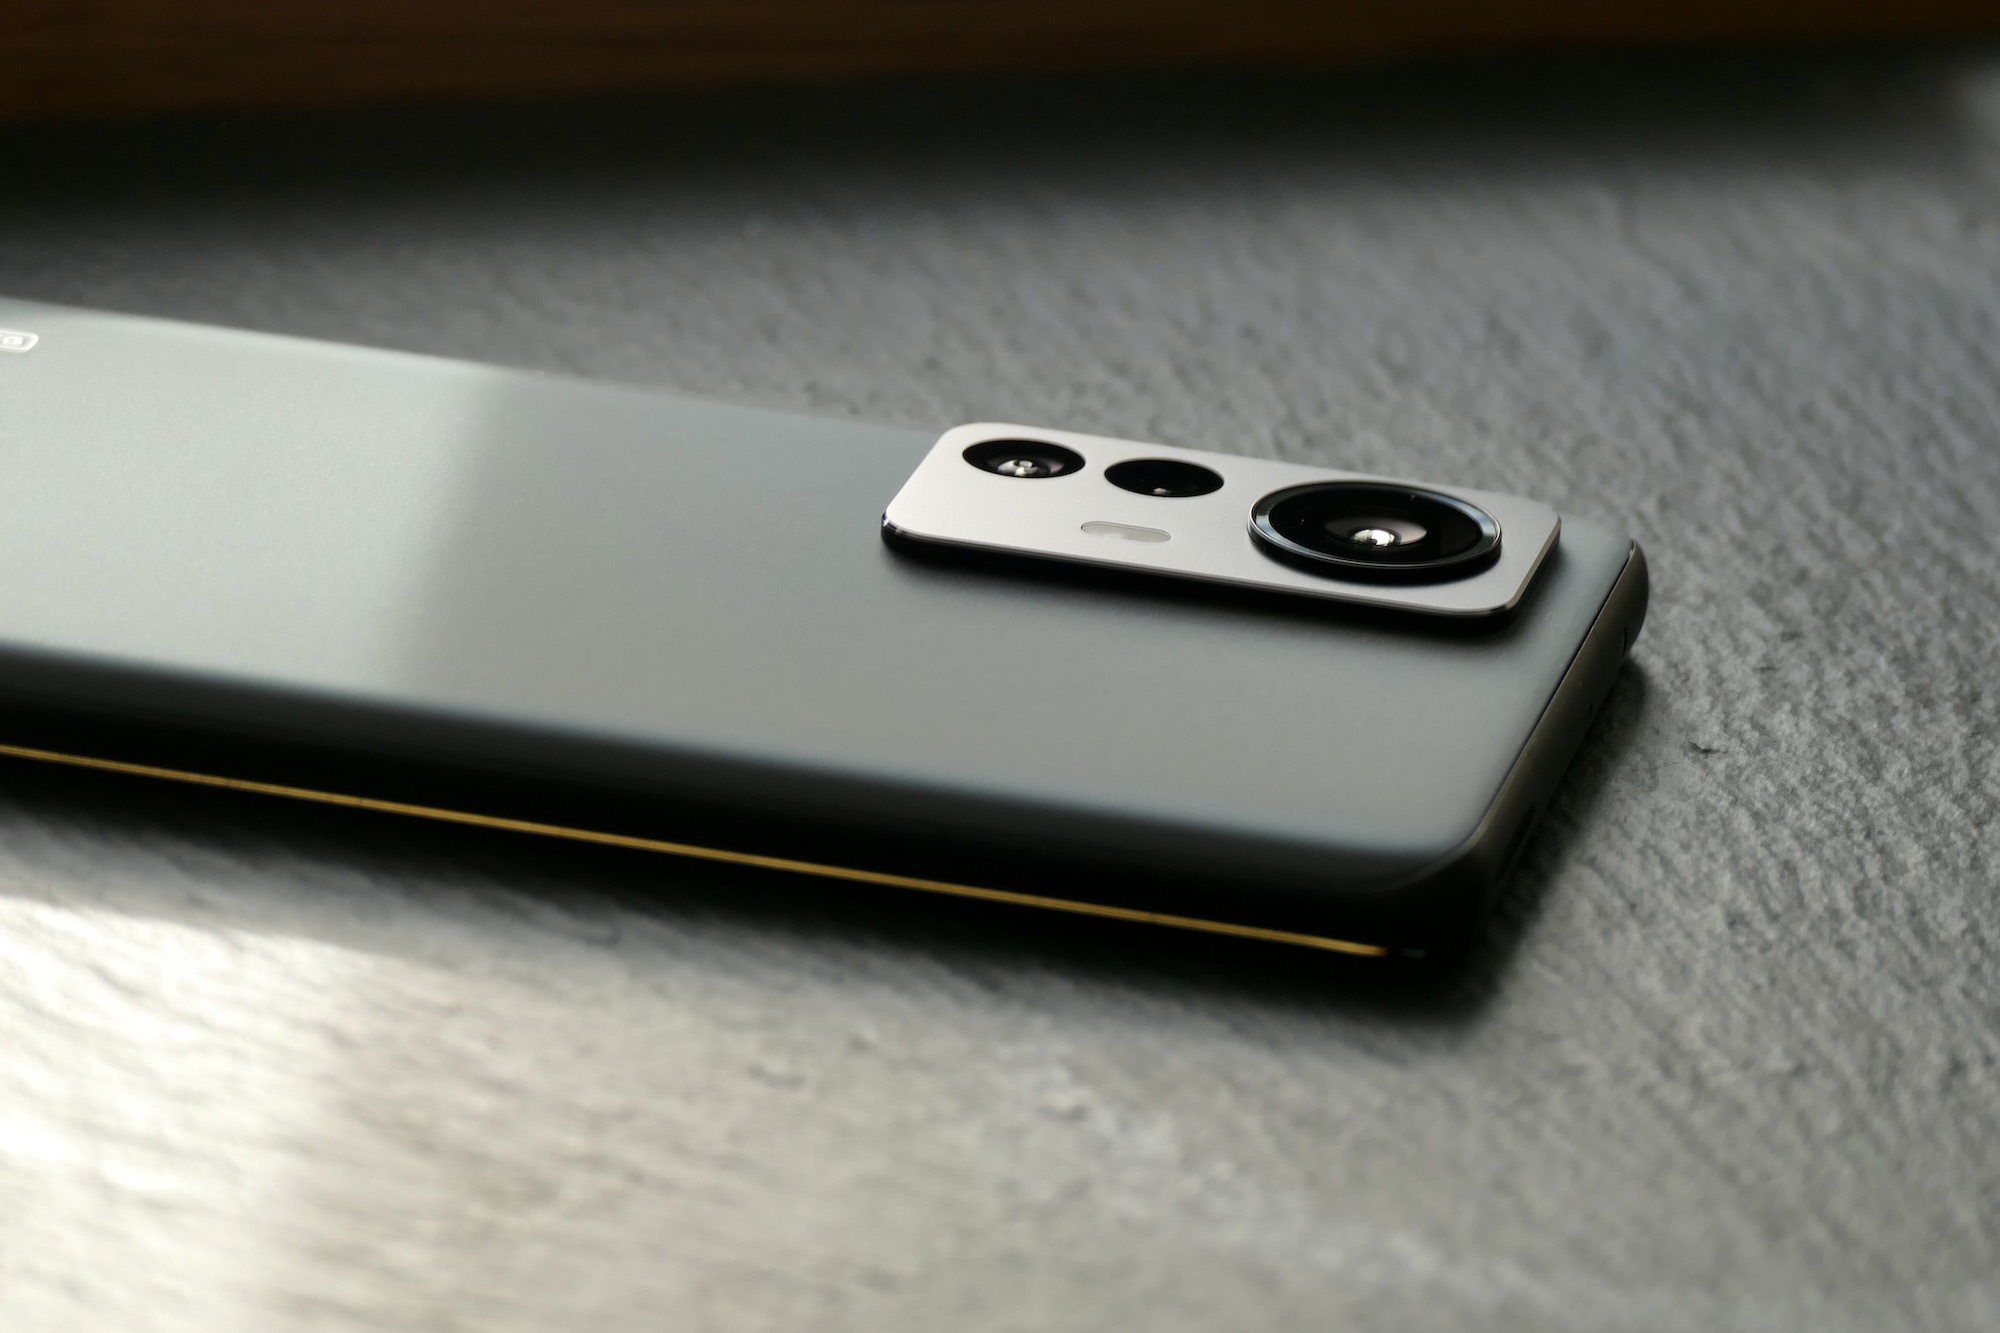 Xiaomi 12 Flagship Phones Unveiled: 50MP Cameras and AI Photo Tech